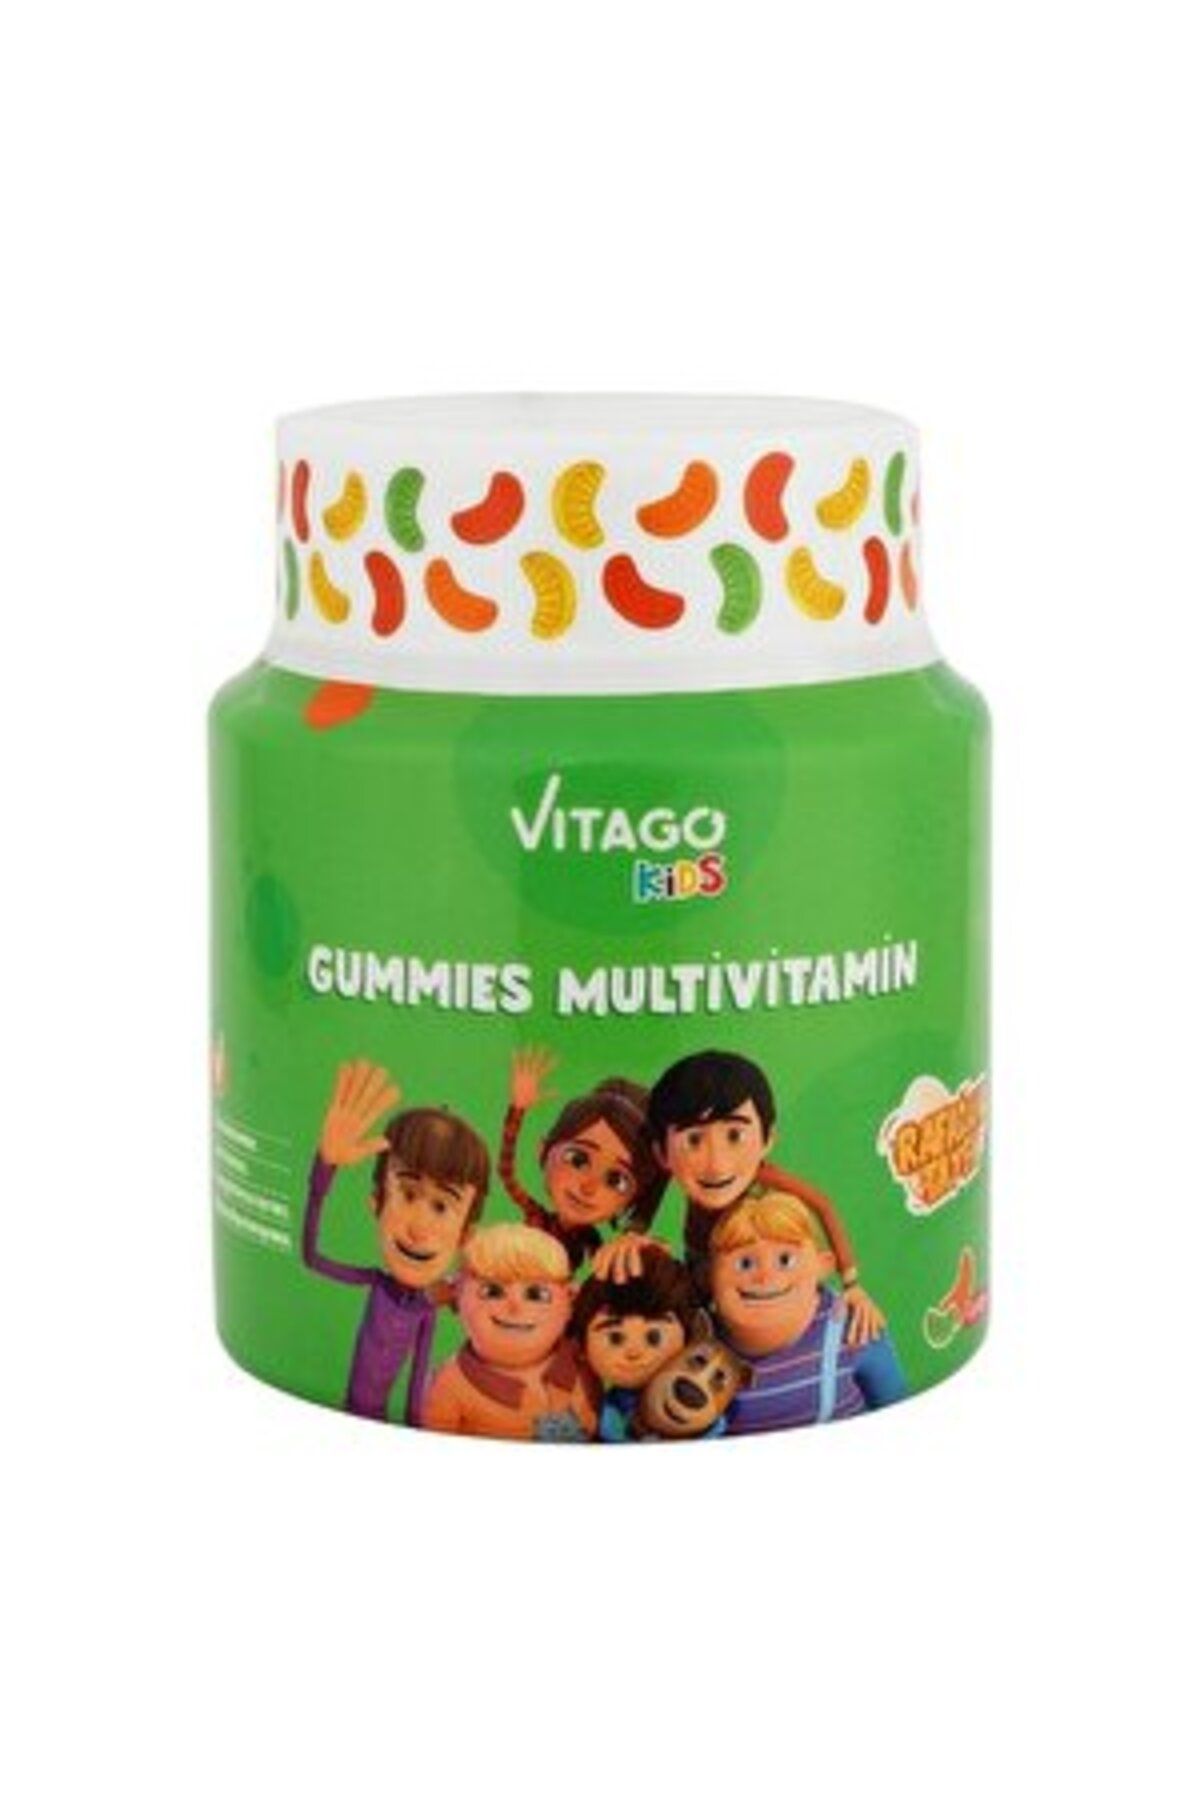 Vitago Kids Gummies Multivitamin Multimineral İçeren 60 Adet Çiğnenebilir Gummy Jel ( 2 ADET )